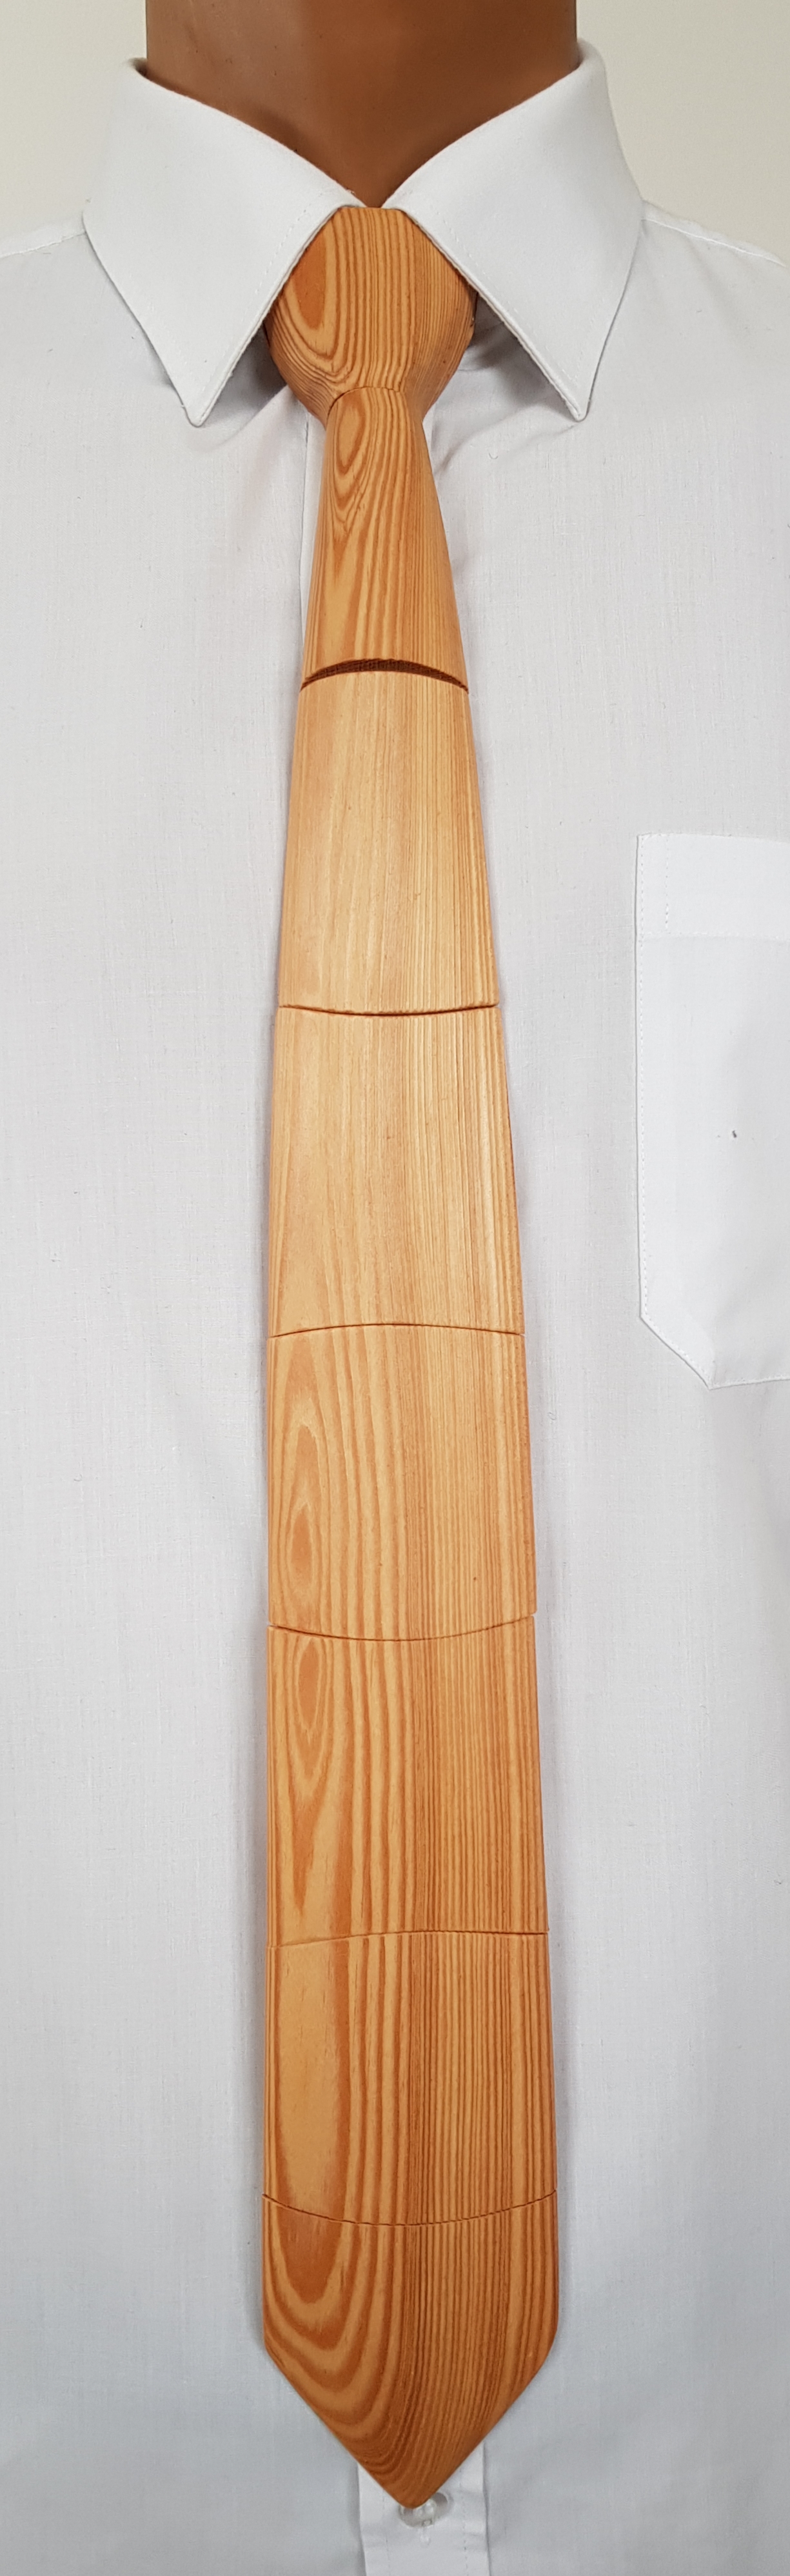 Drevená kravata 024